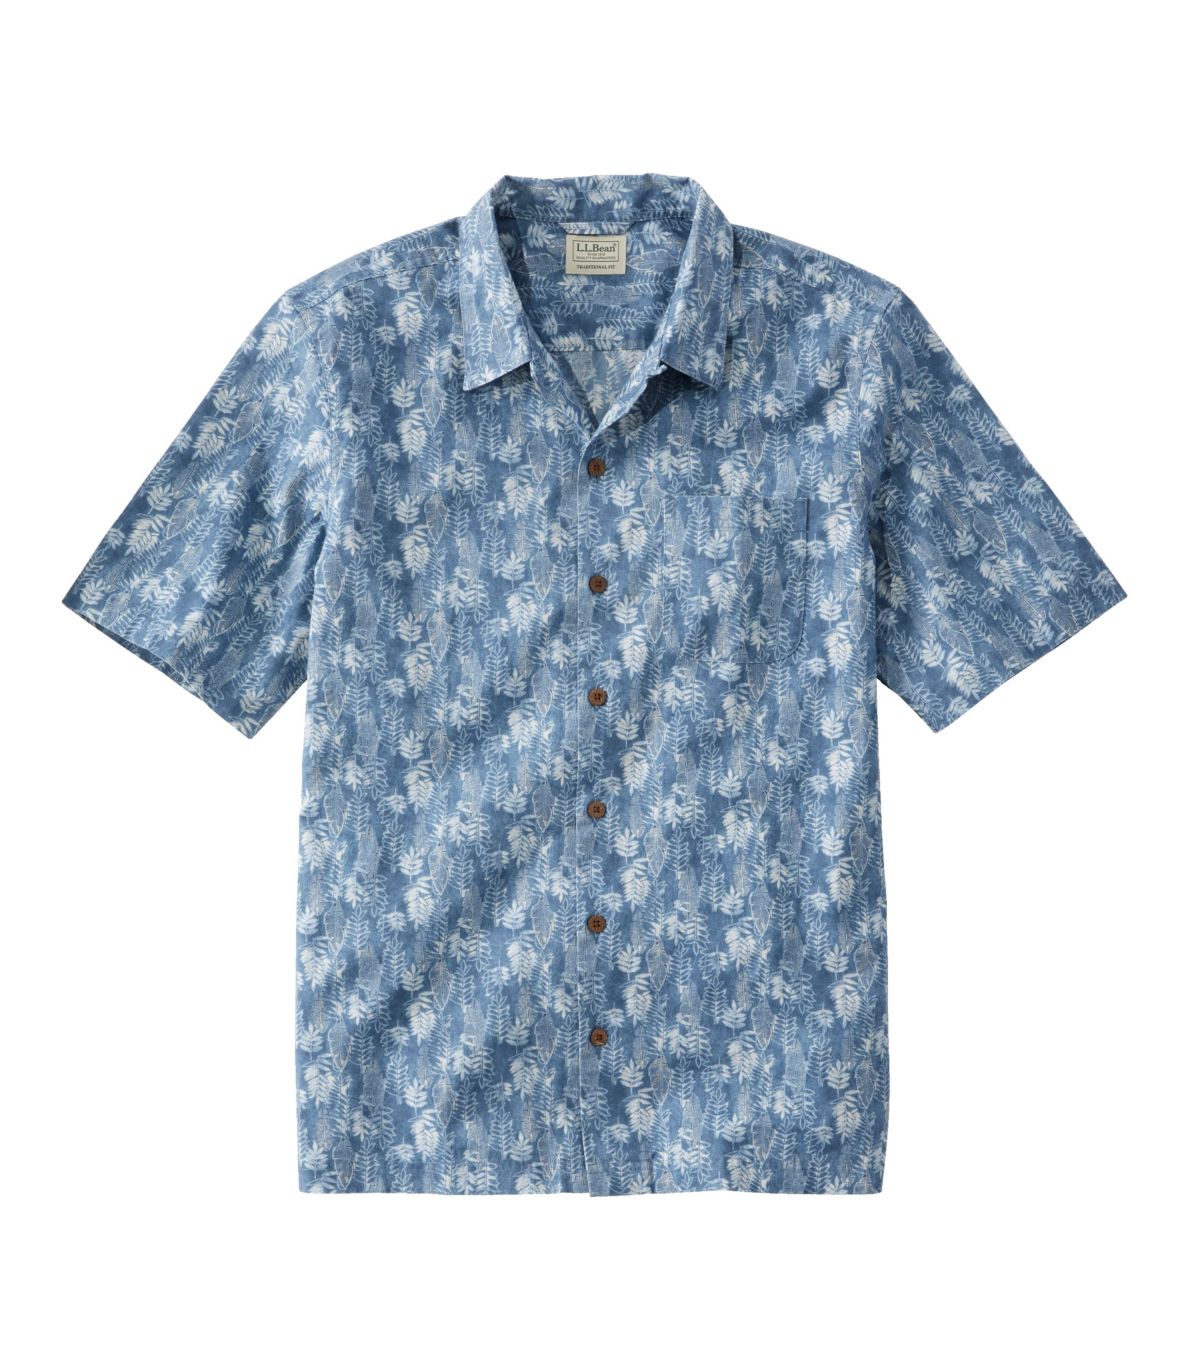 Men's Tropics Shirt, Short-Sleeve Print